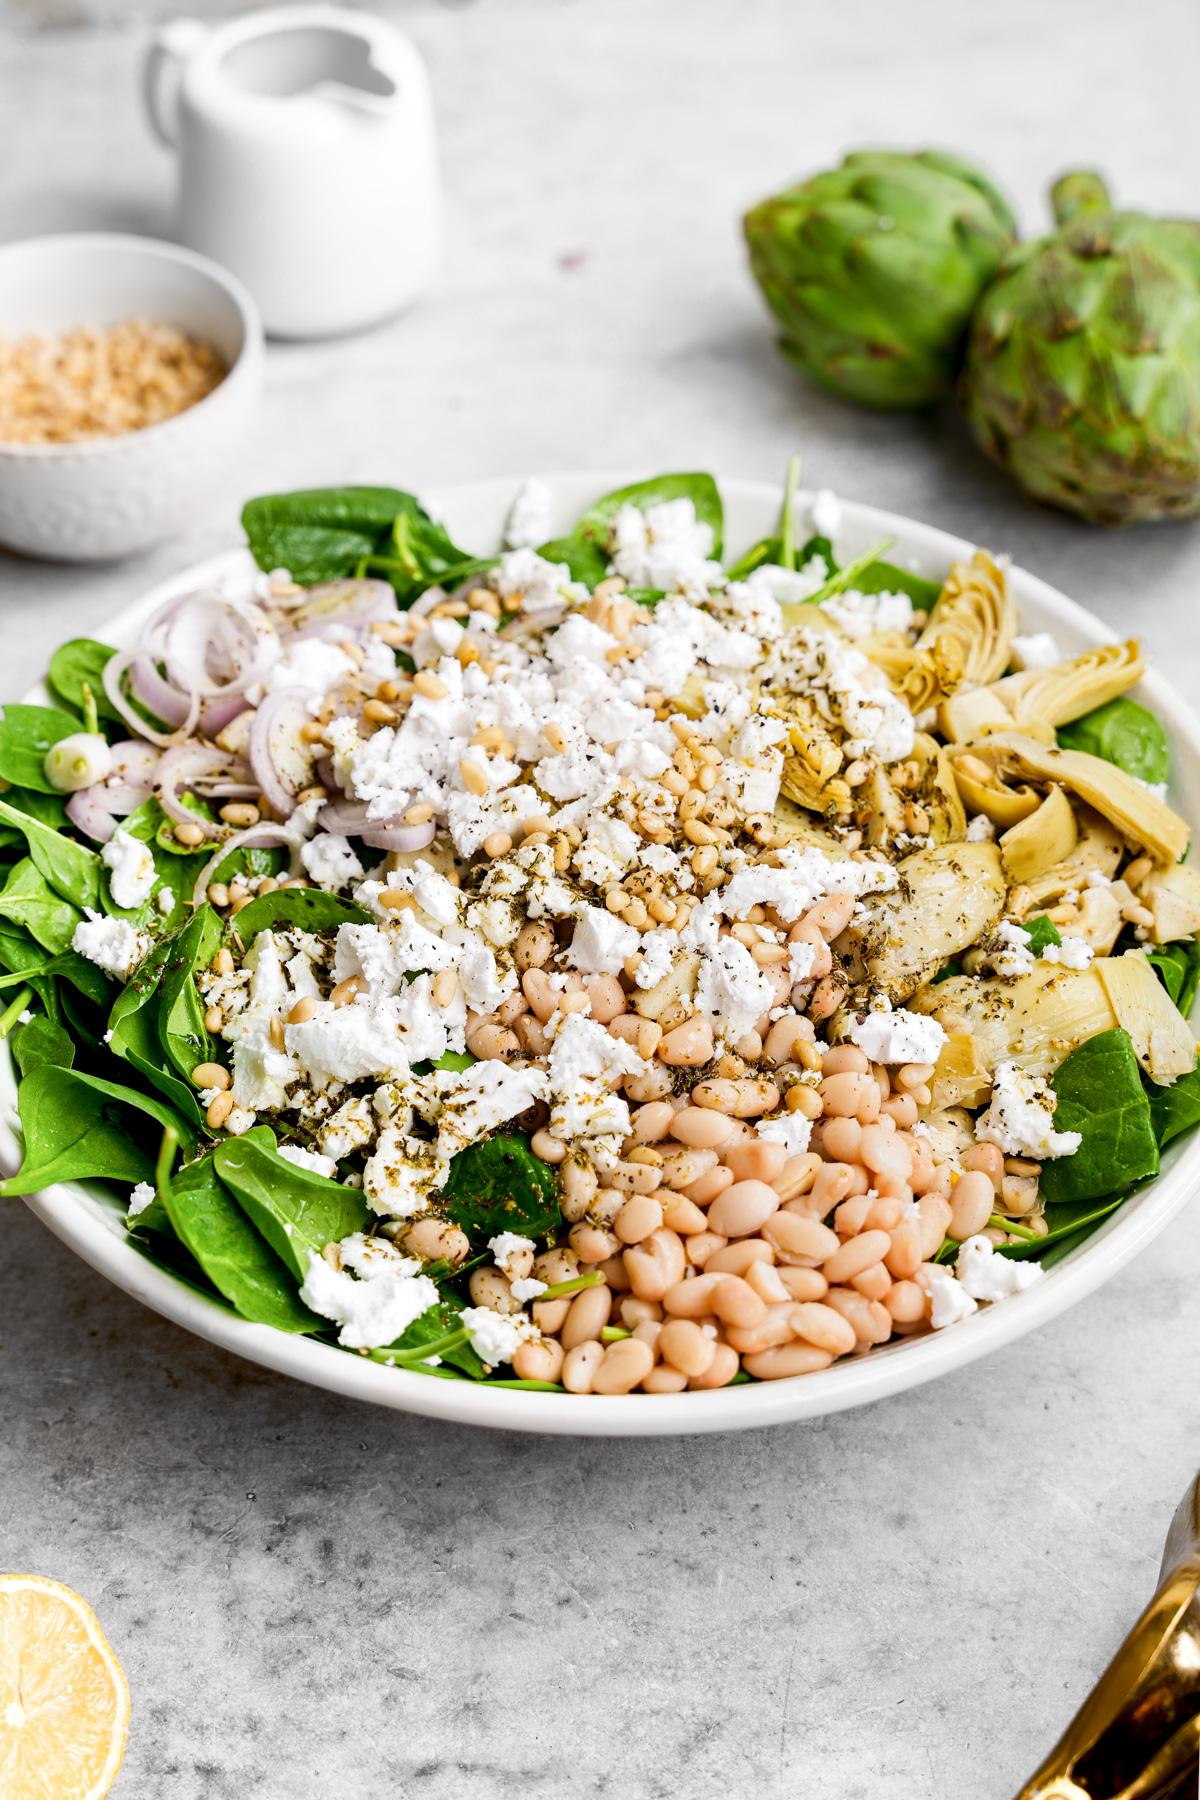 the healthy vegan salad with the lemon vinaigrette